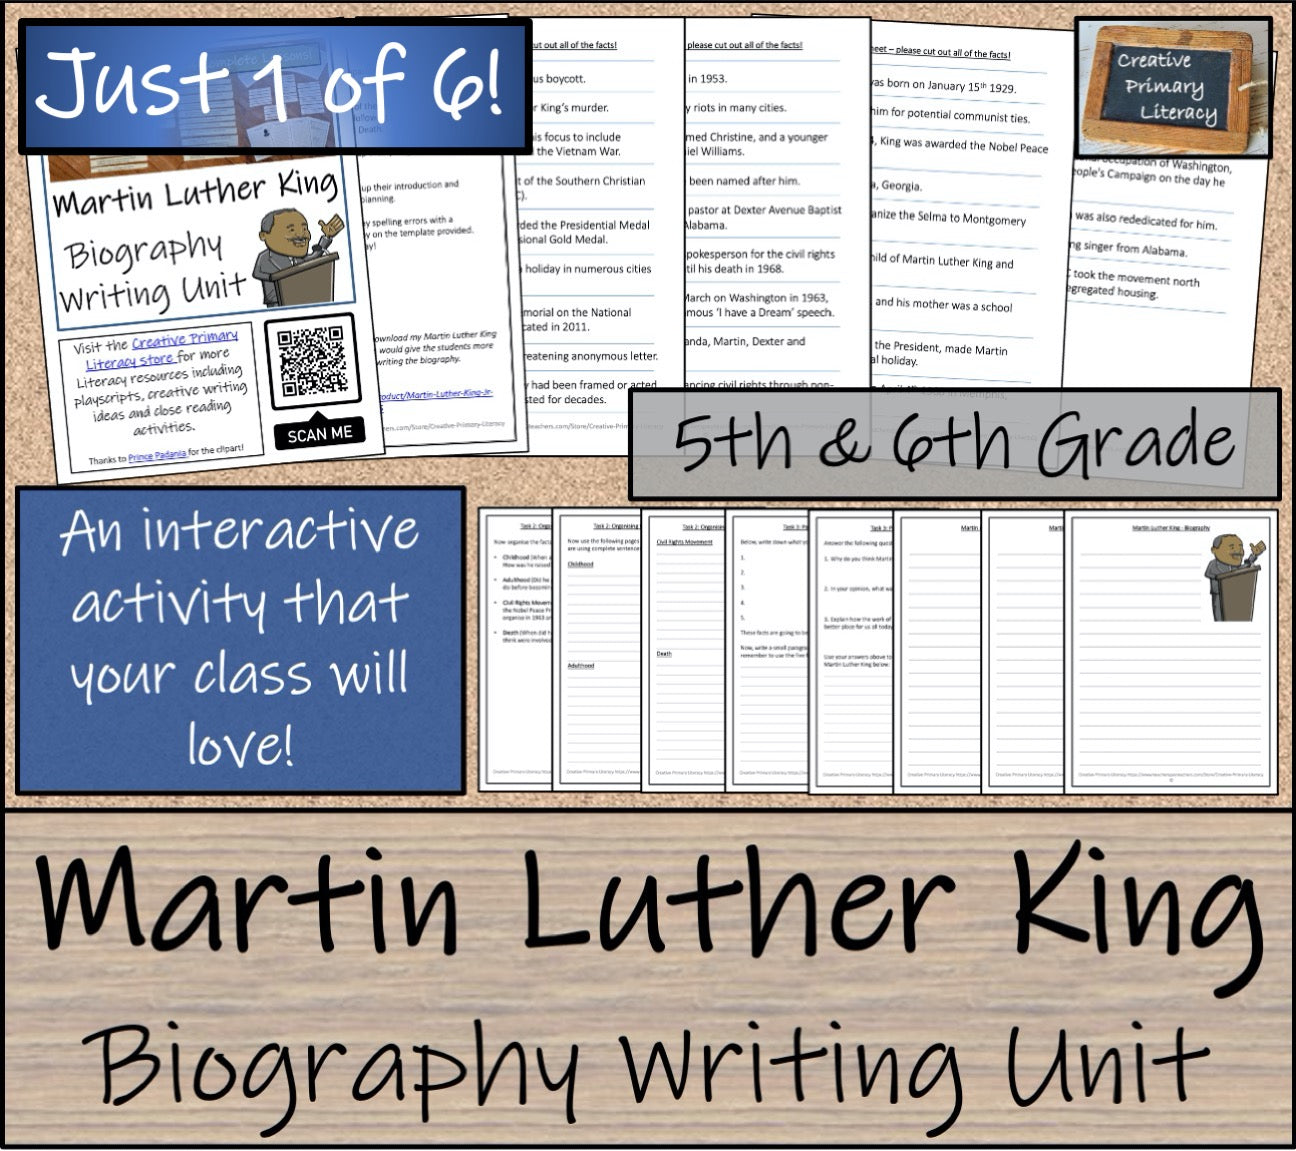 Black History Month Close Reading & Writing Mega Bundle | 5th Grade & 6th Grade